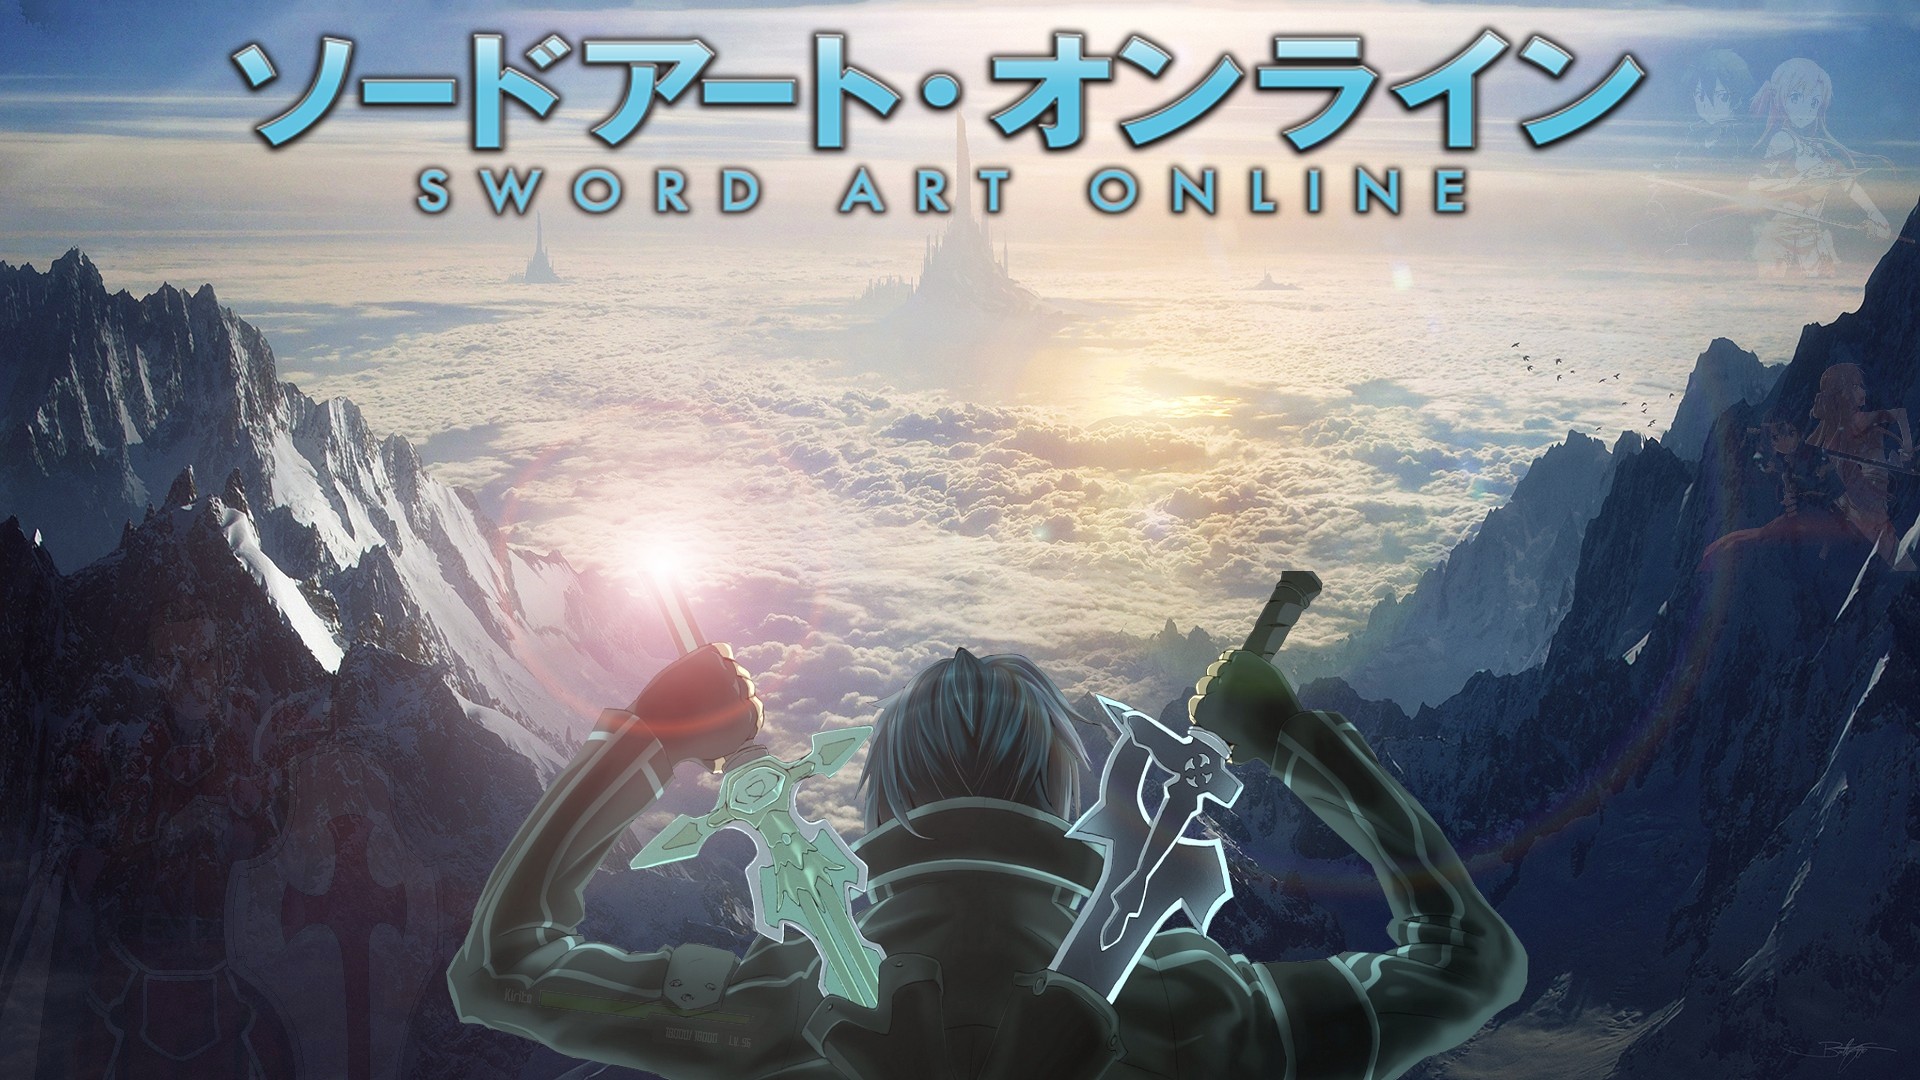 ImageMade This Sword Art Online Wallpaper